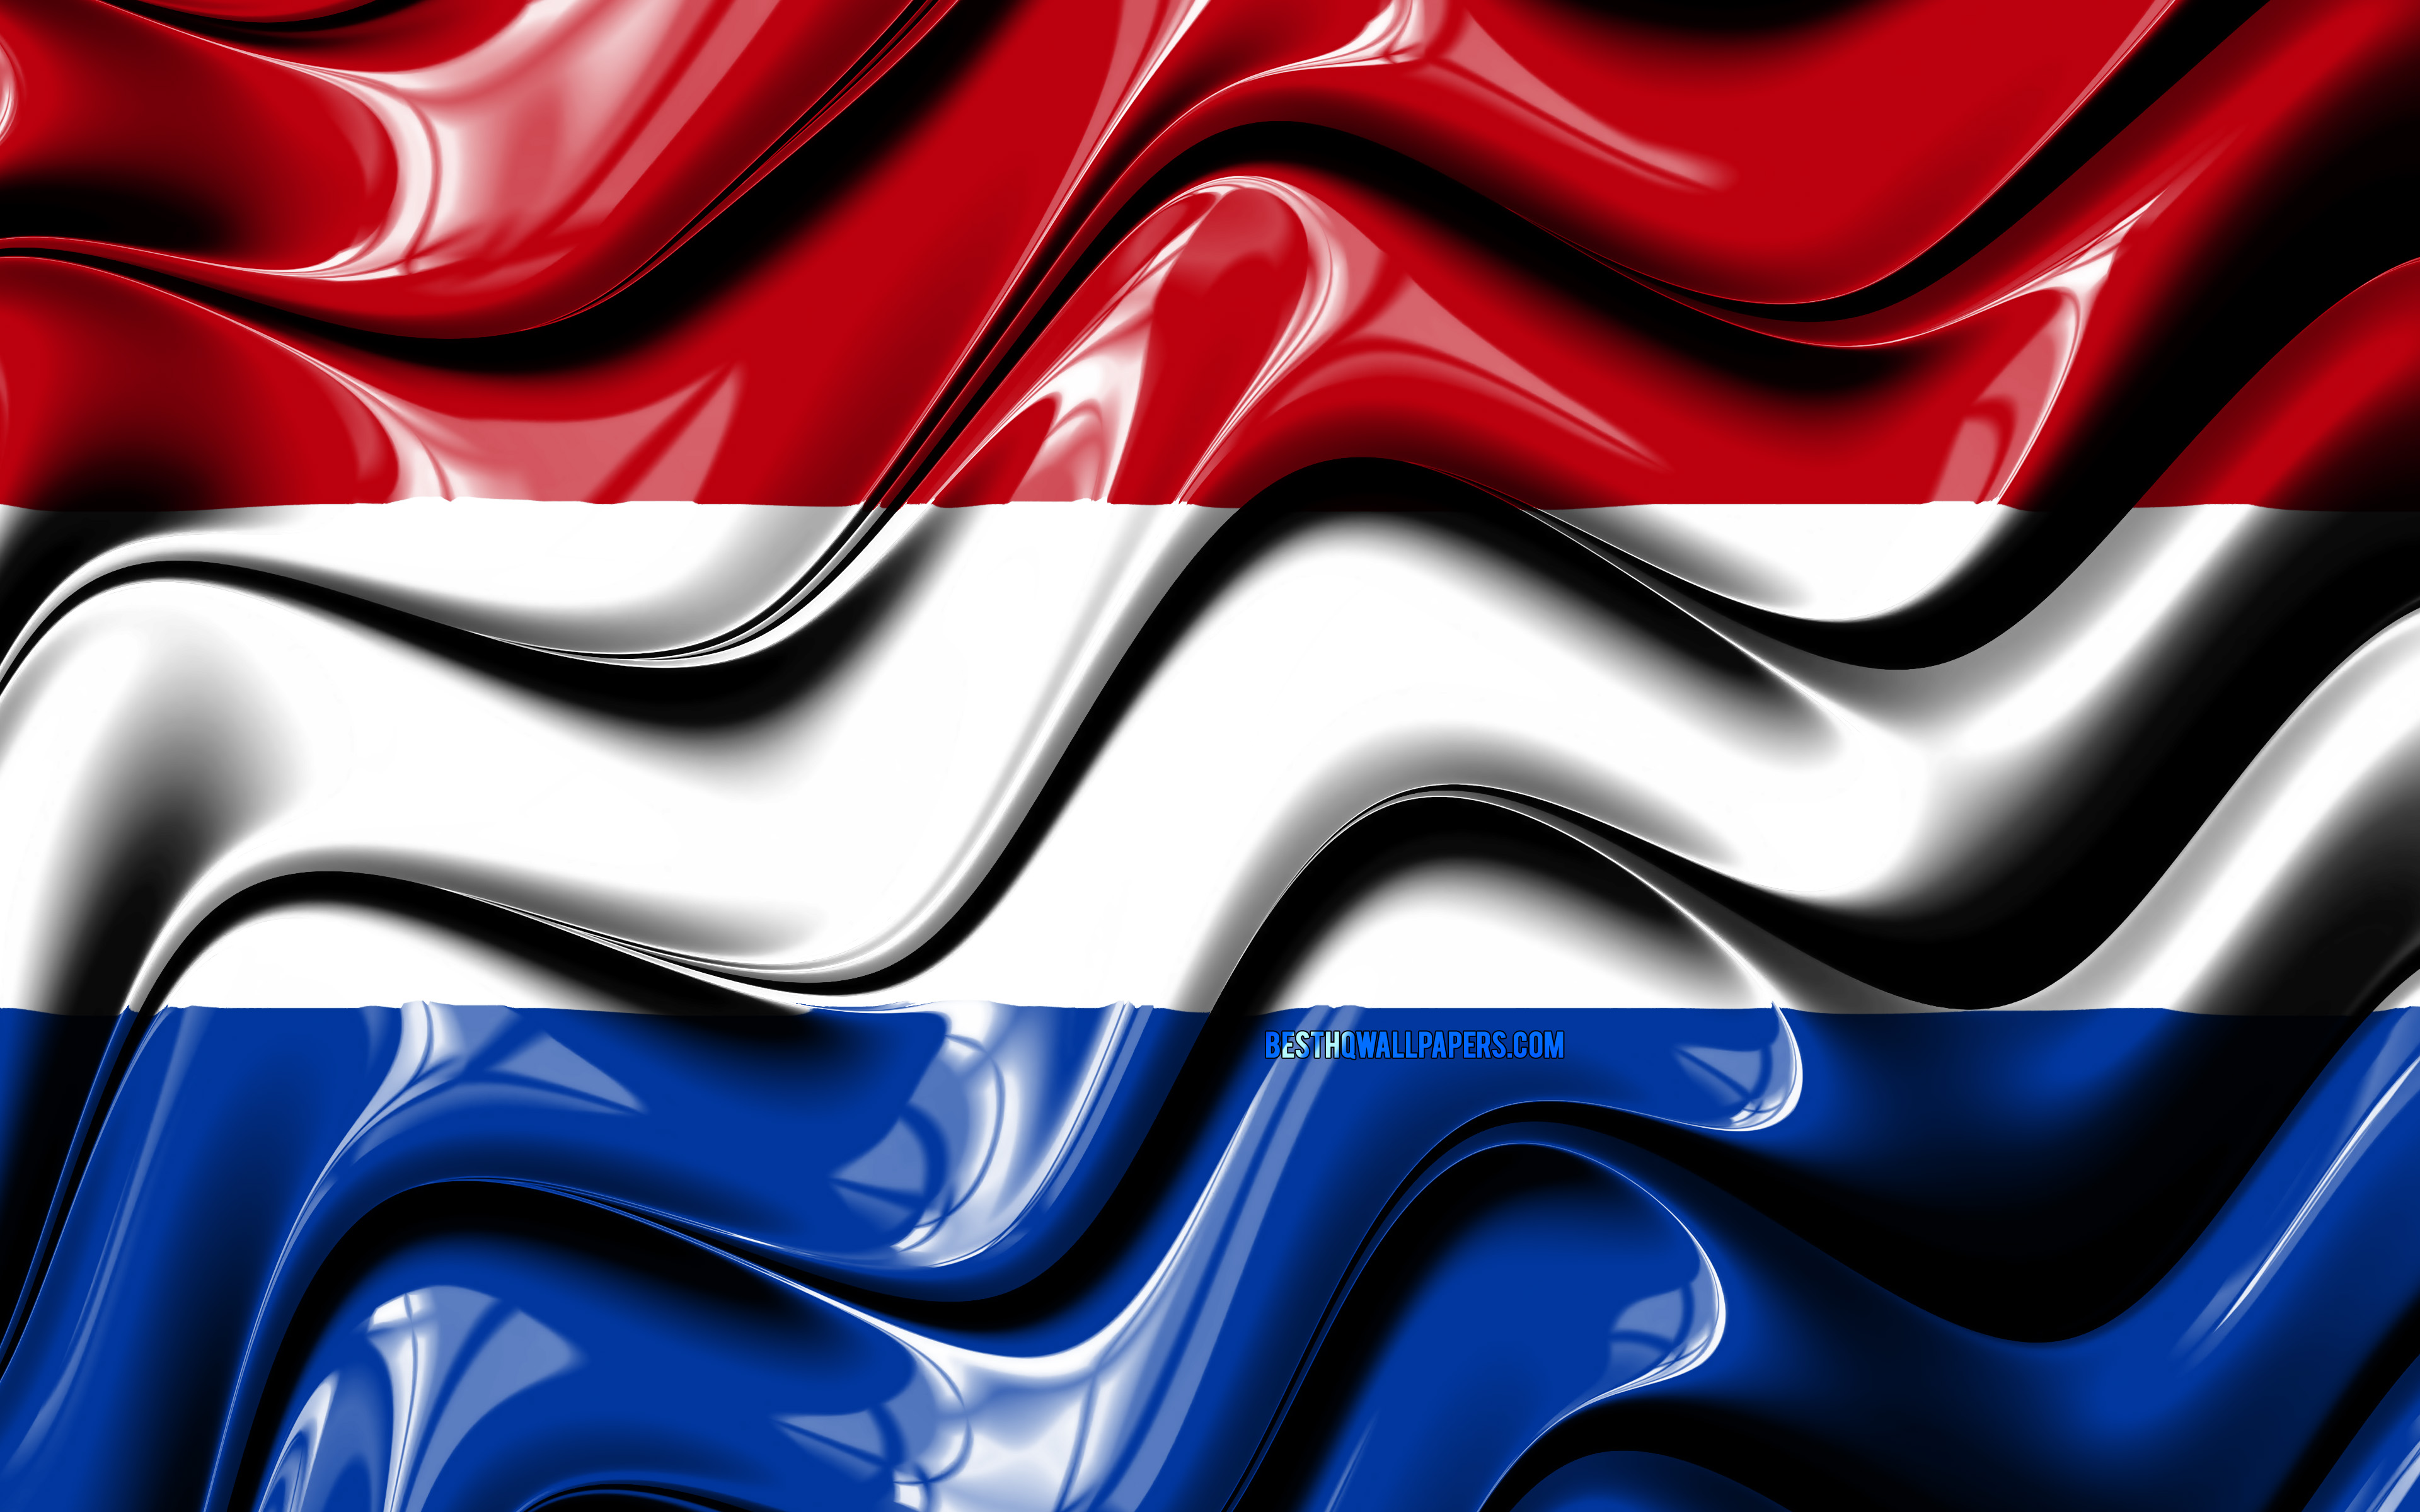 Download wallpaper Dutch flag, 4k, Europe, national symbols, Flag of Netherlands, 3D art, Netherlands, European countries, Netherlands 3D flag for desktop with resolution 3840x2400. High Quality HD picture wallpaper